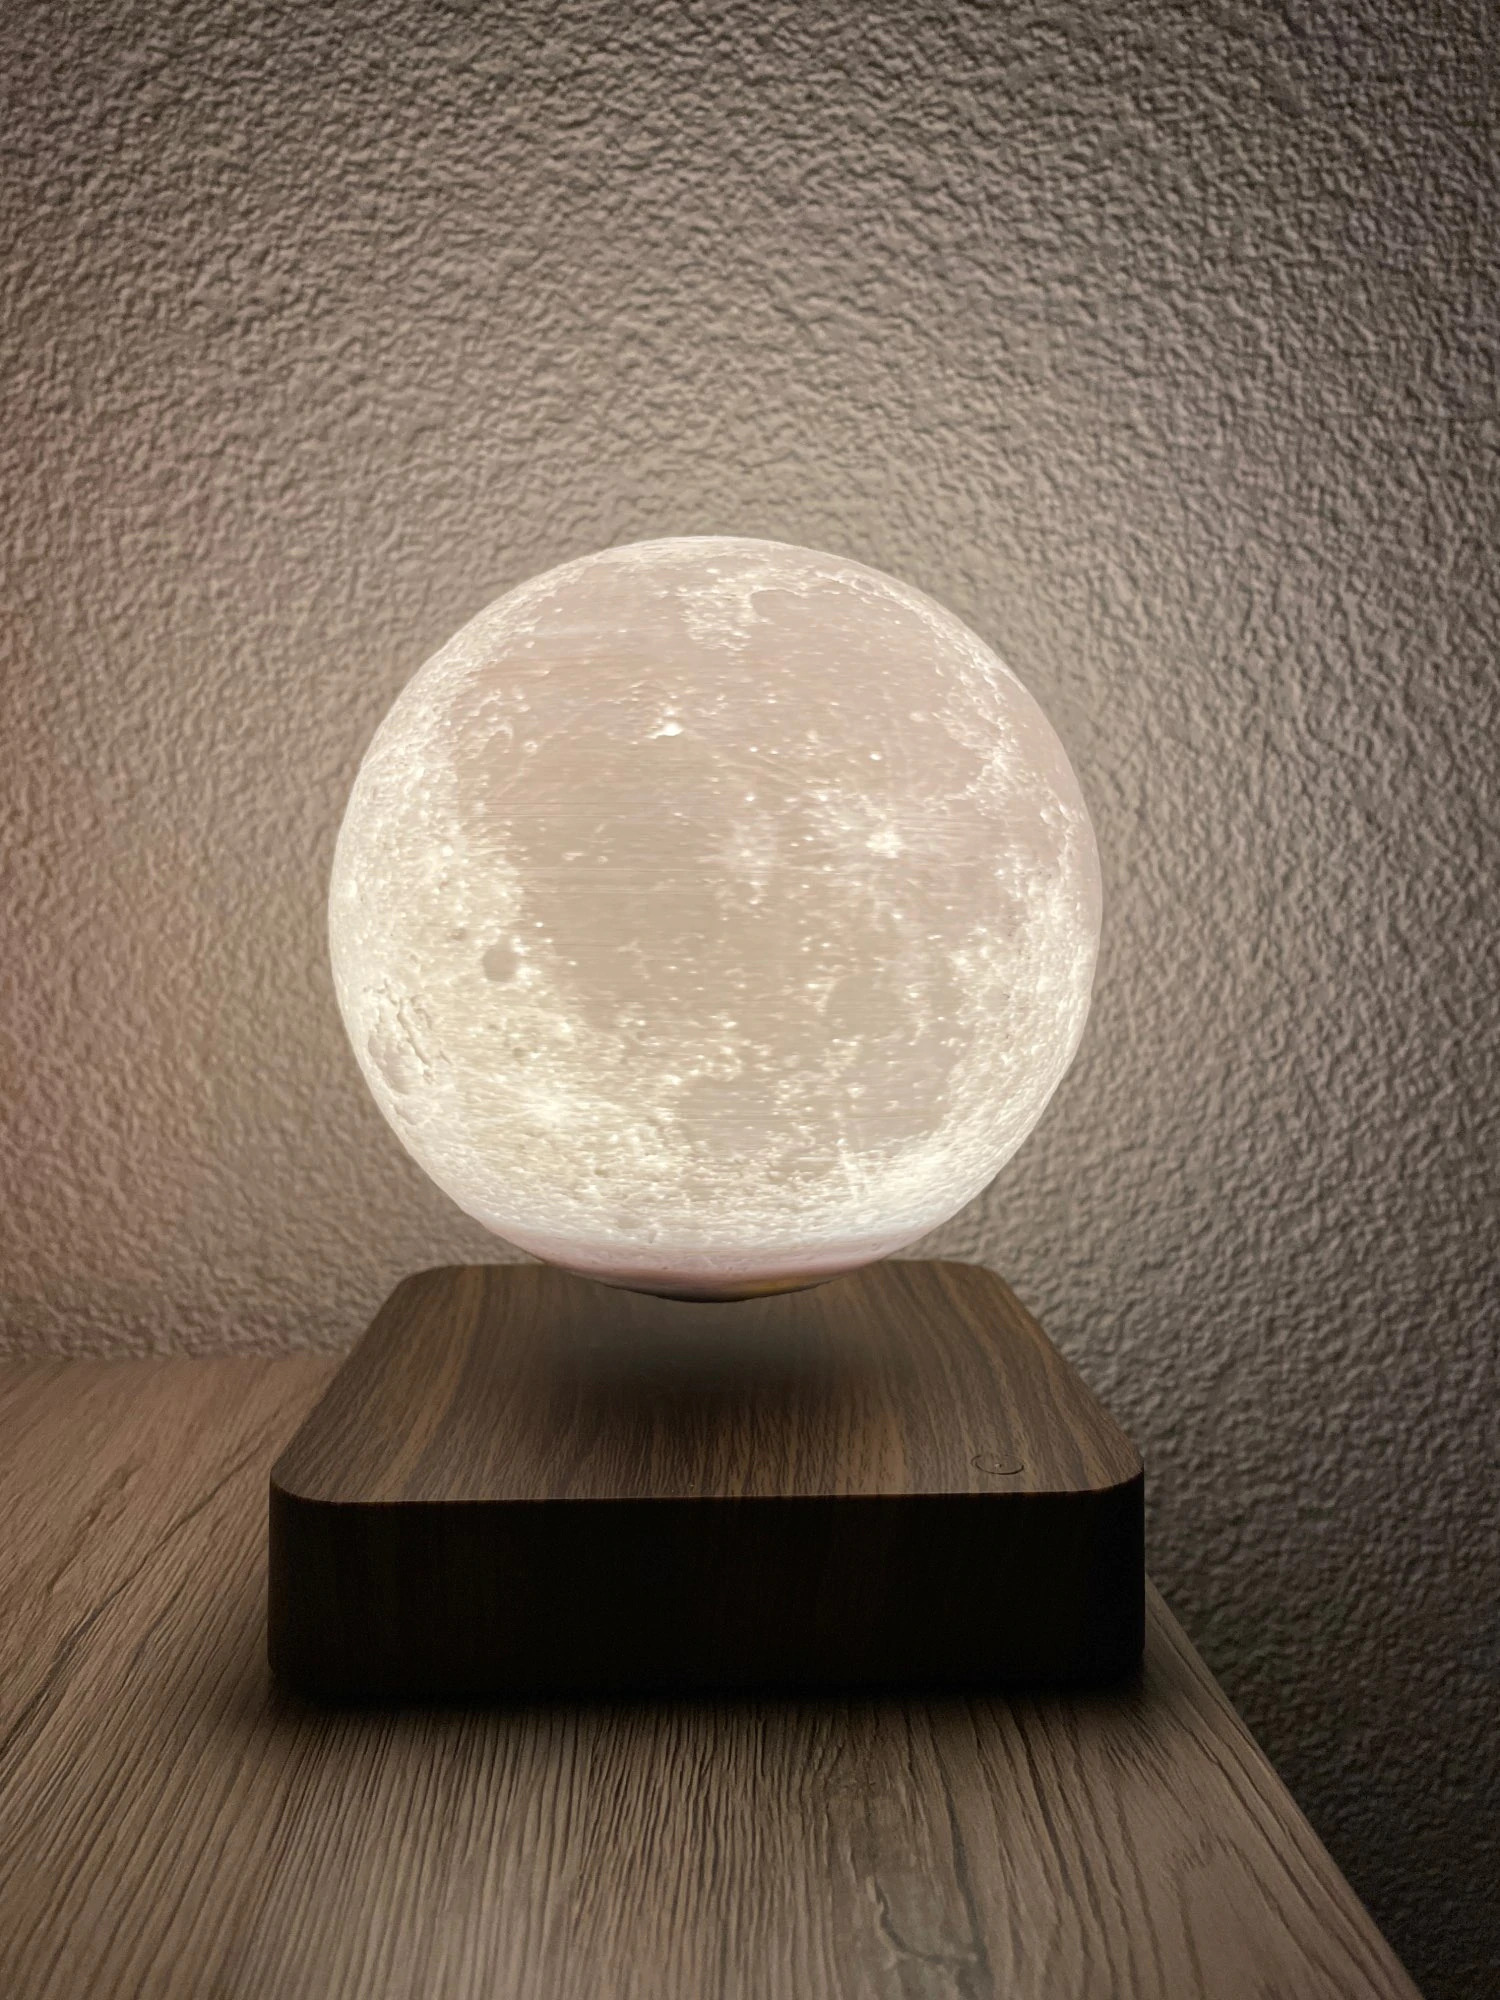 levitating magnetic moon lamp for desk